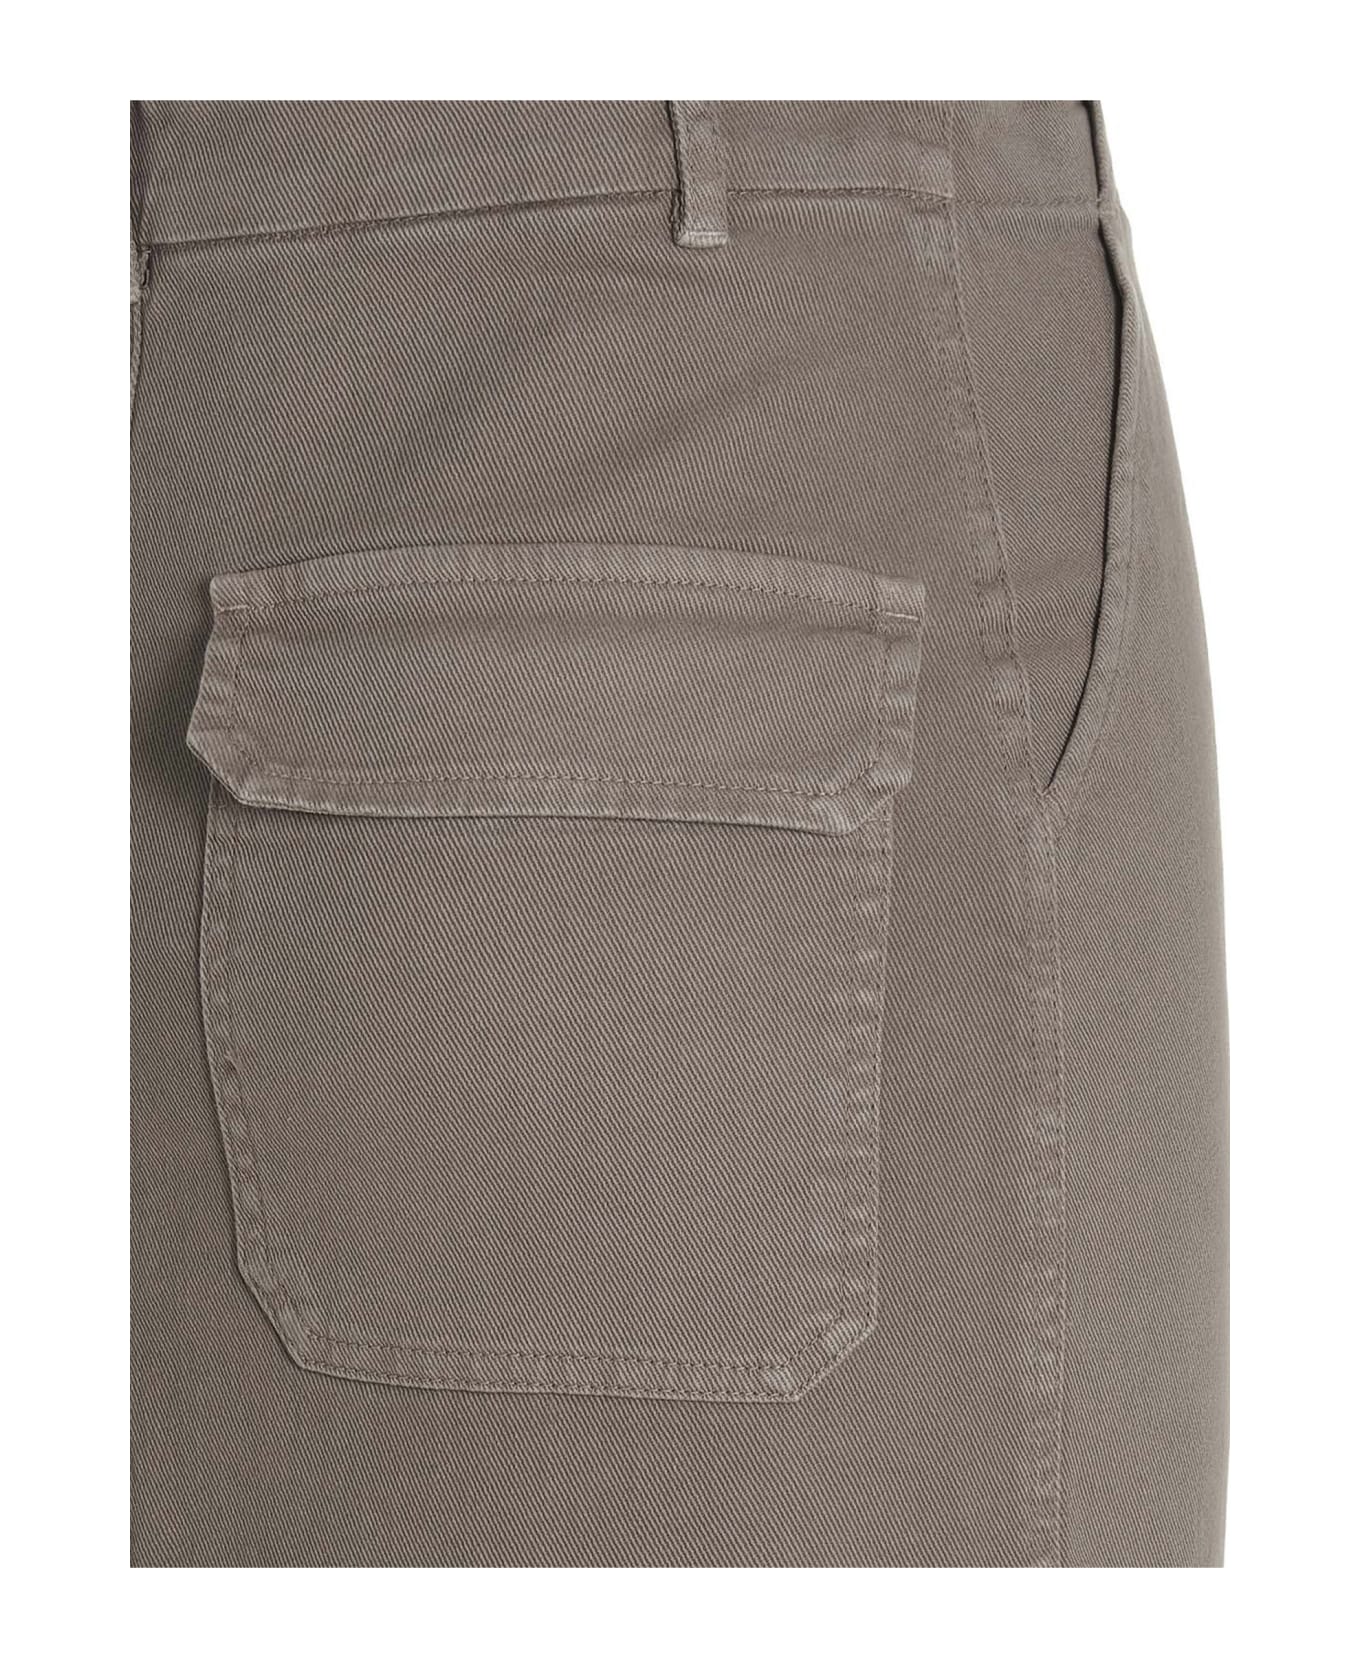 (nude) Midi Denim Skirt - Gray スカート